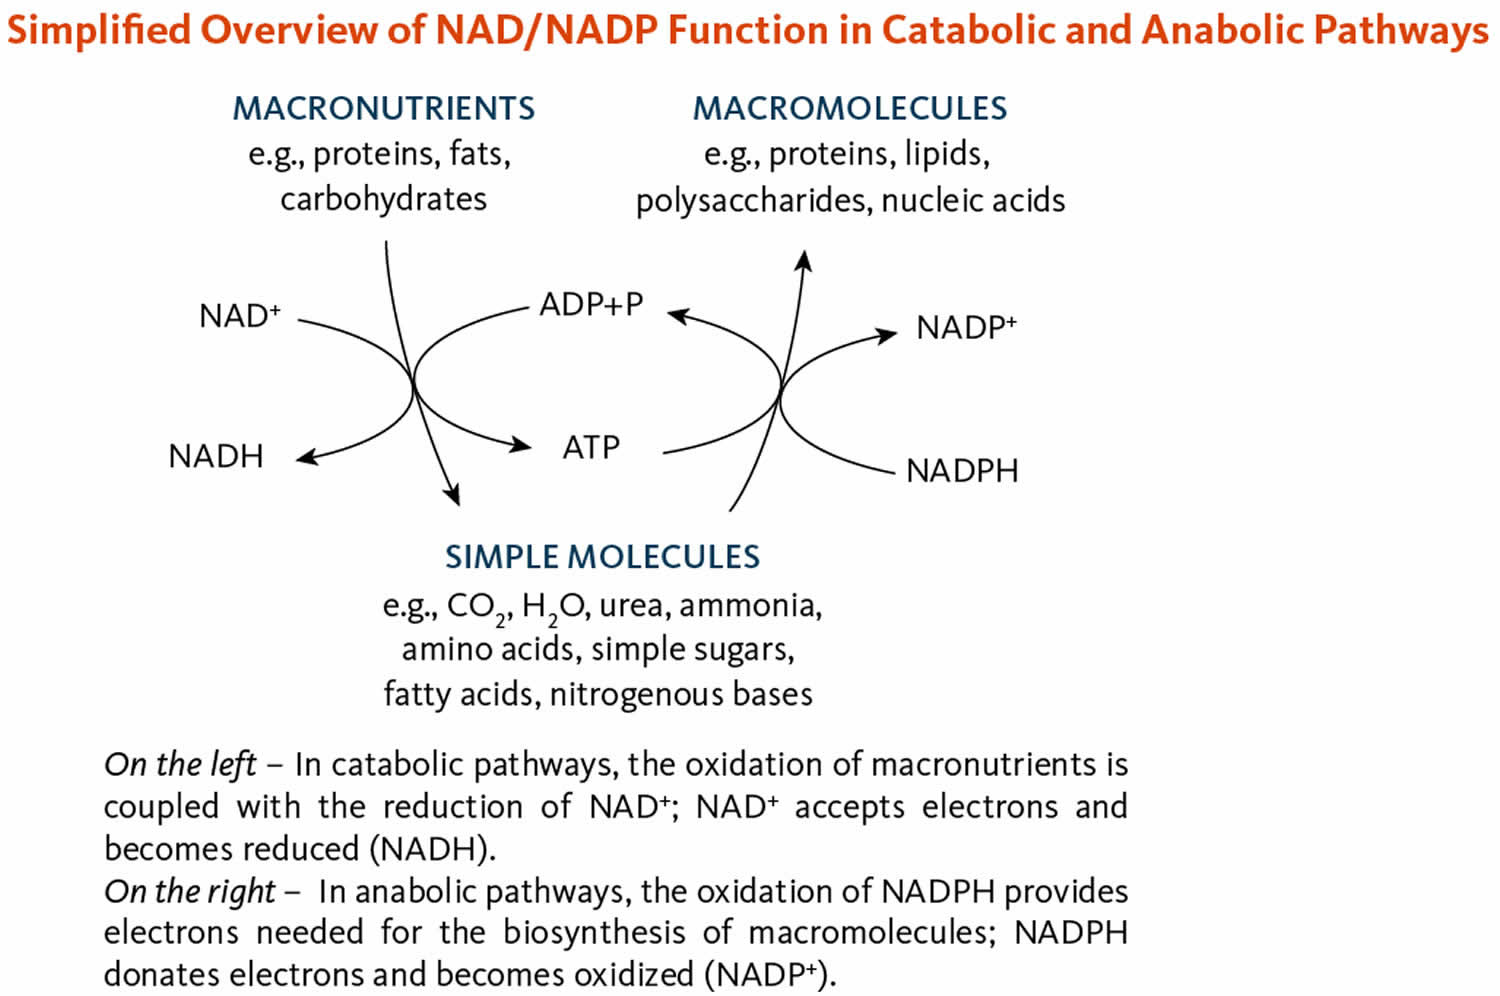 Nicotinamide adenine dinucleotide (NAD) and nicotinamide adenine dinucleotide phosphate (NADP) functions